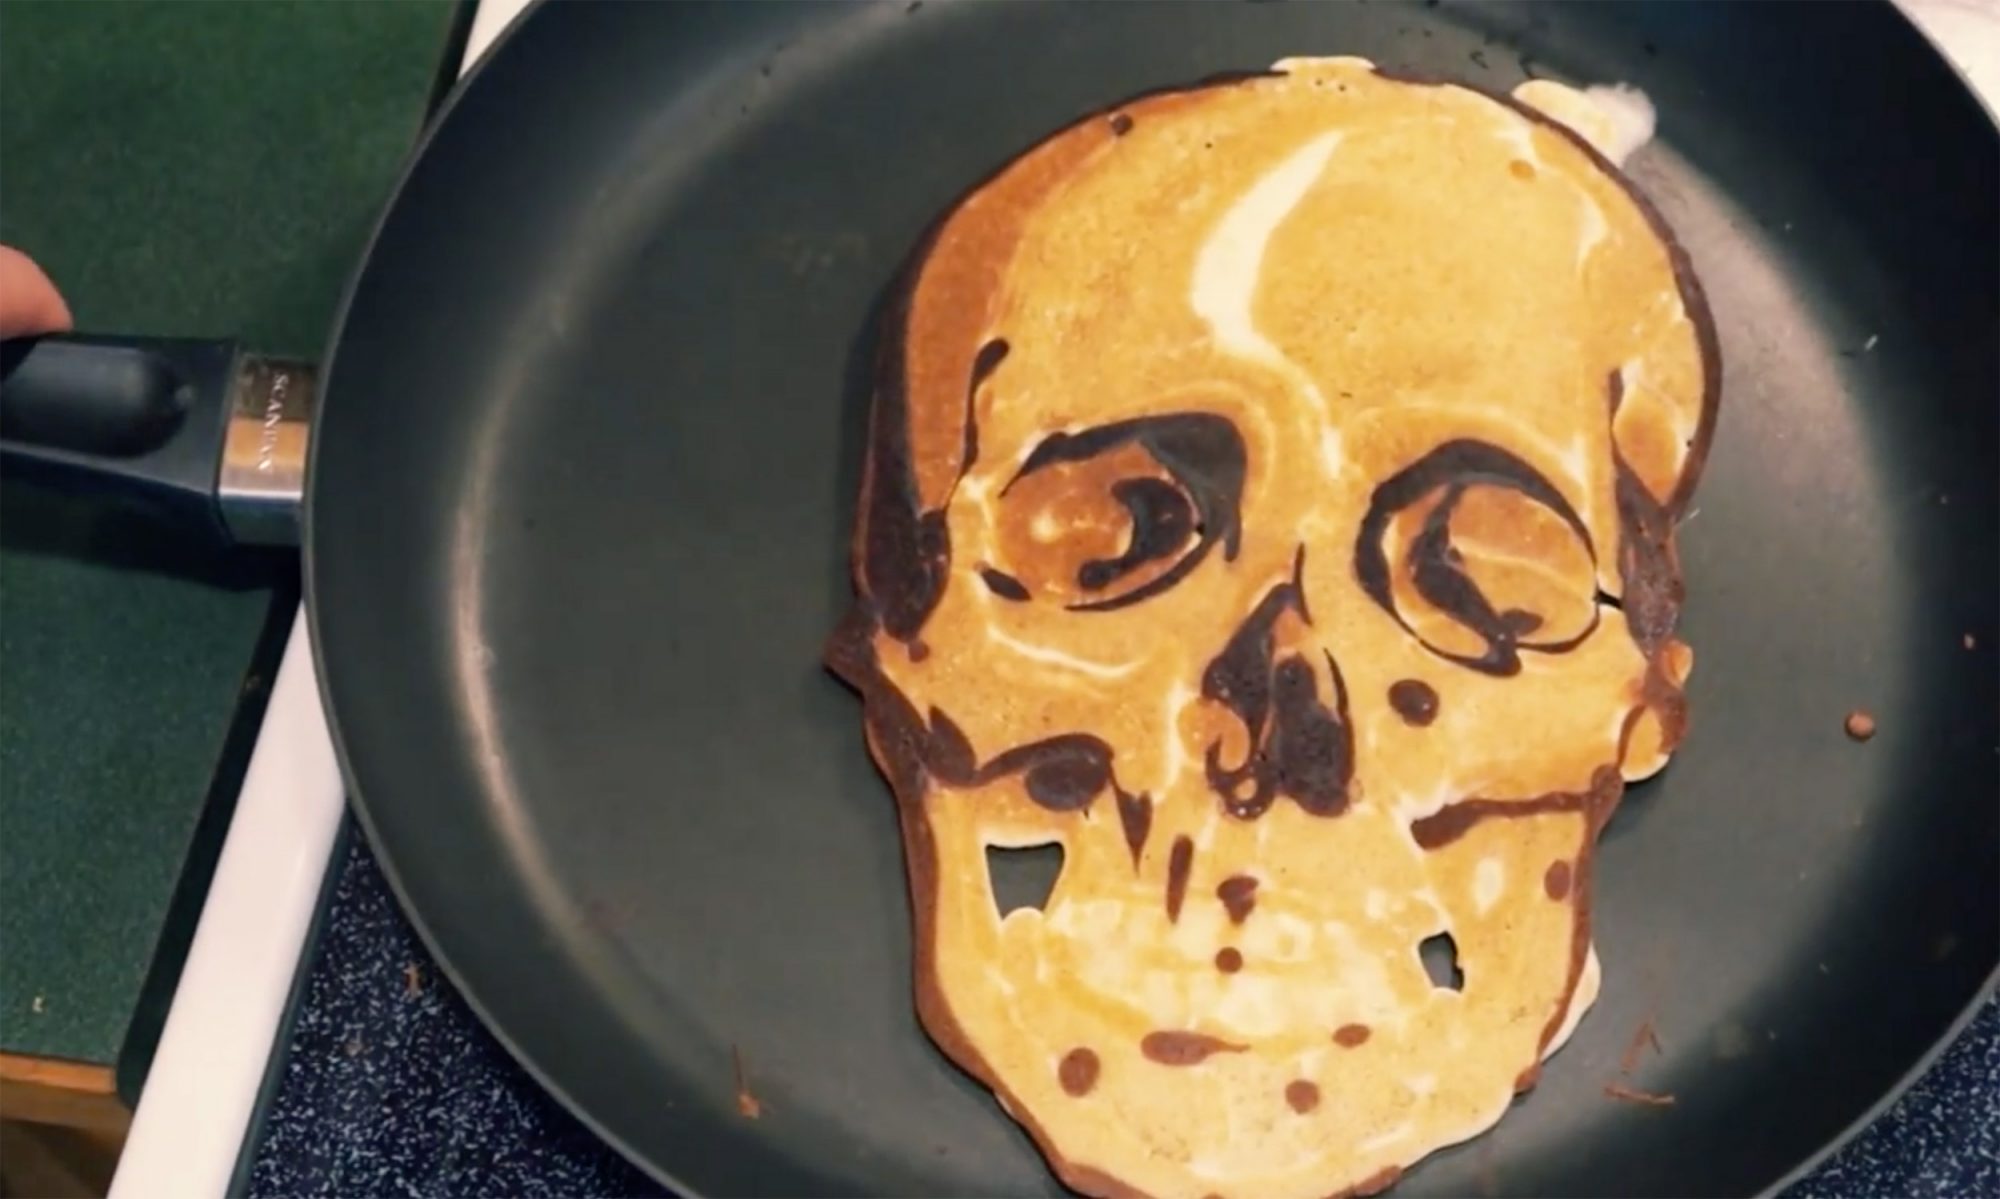 This Pancake Artist Isn't Making Your Parents' Cartoon Pancakes | MyRecipes